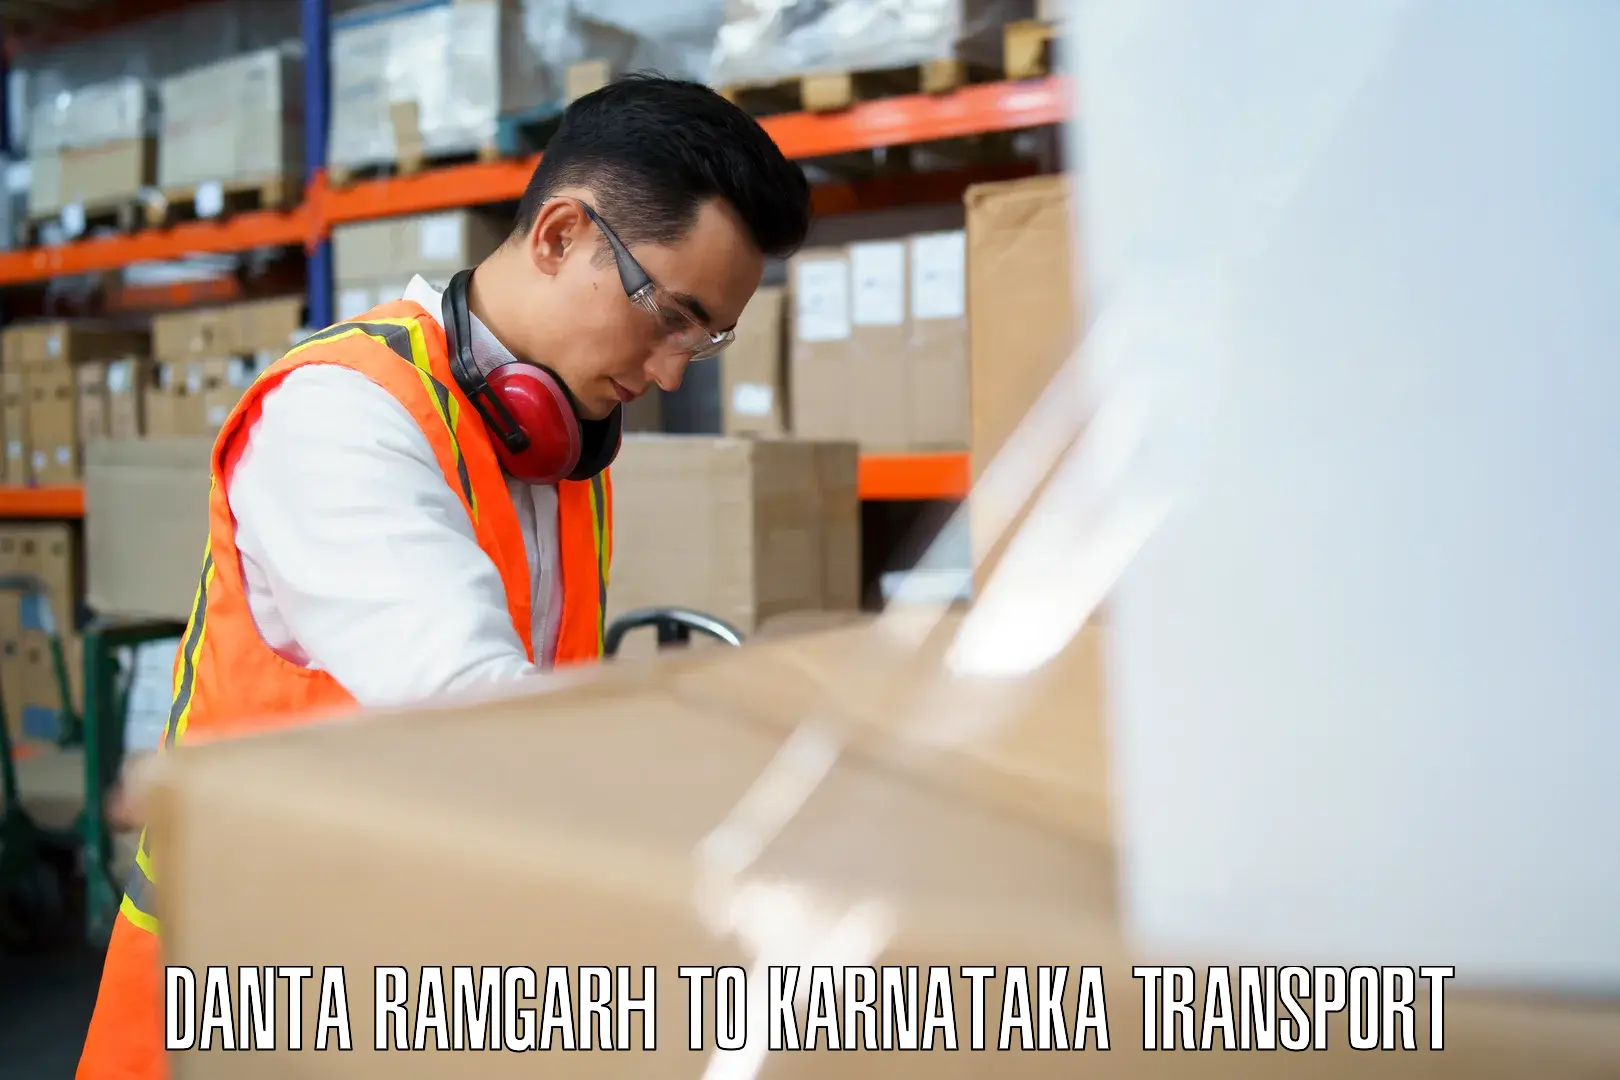 Goods delivery service Danta Ramgarh to Banavara